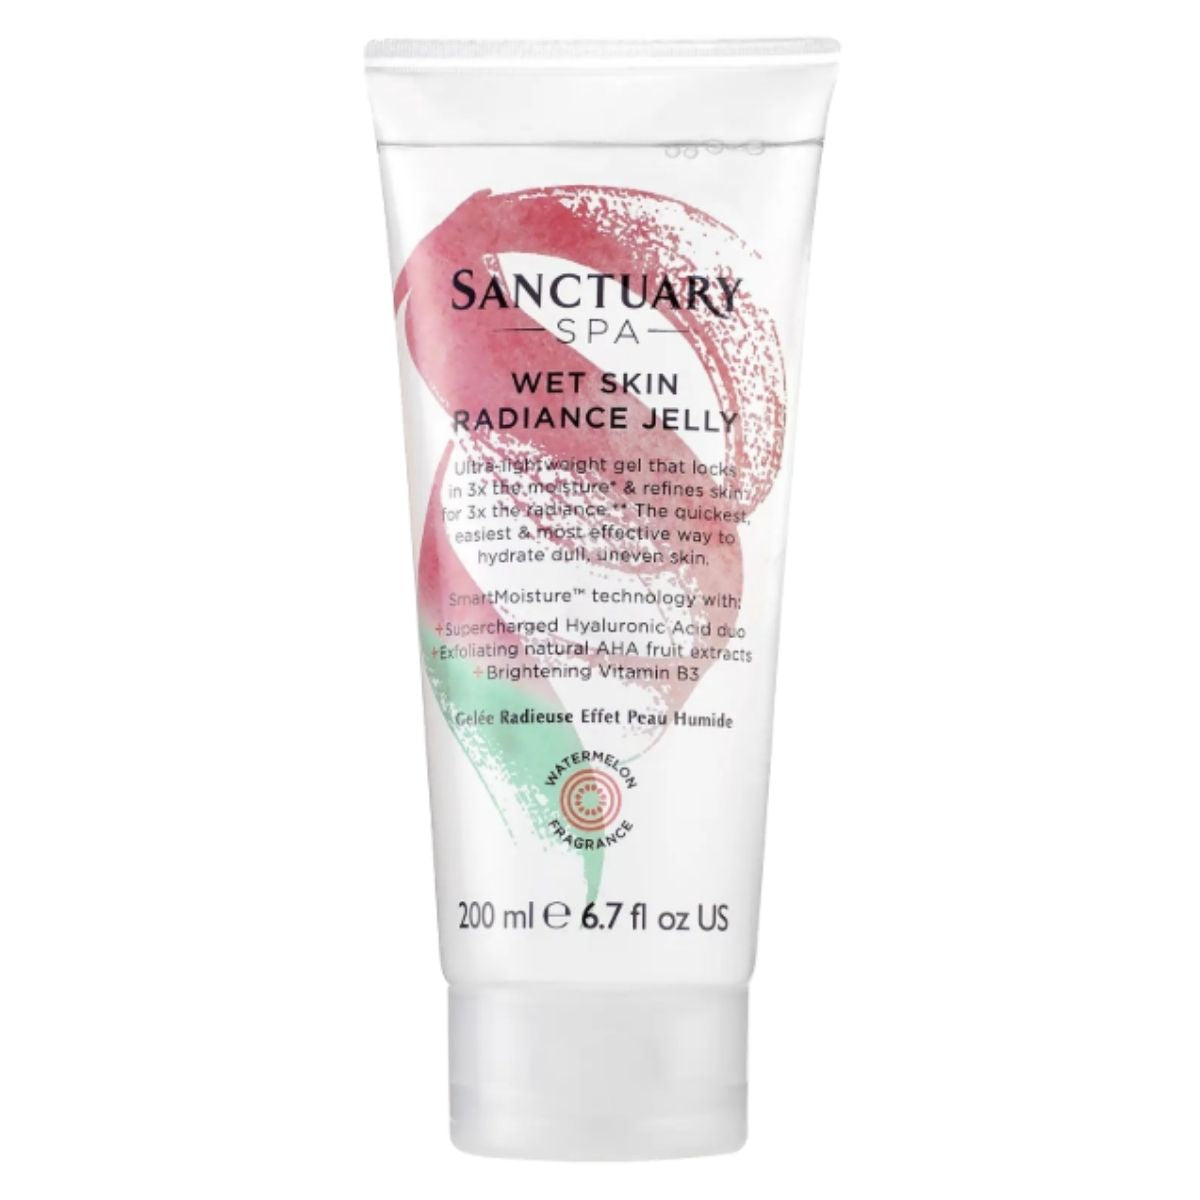 Sanctuary Wet Skin Radiance Jelly